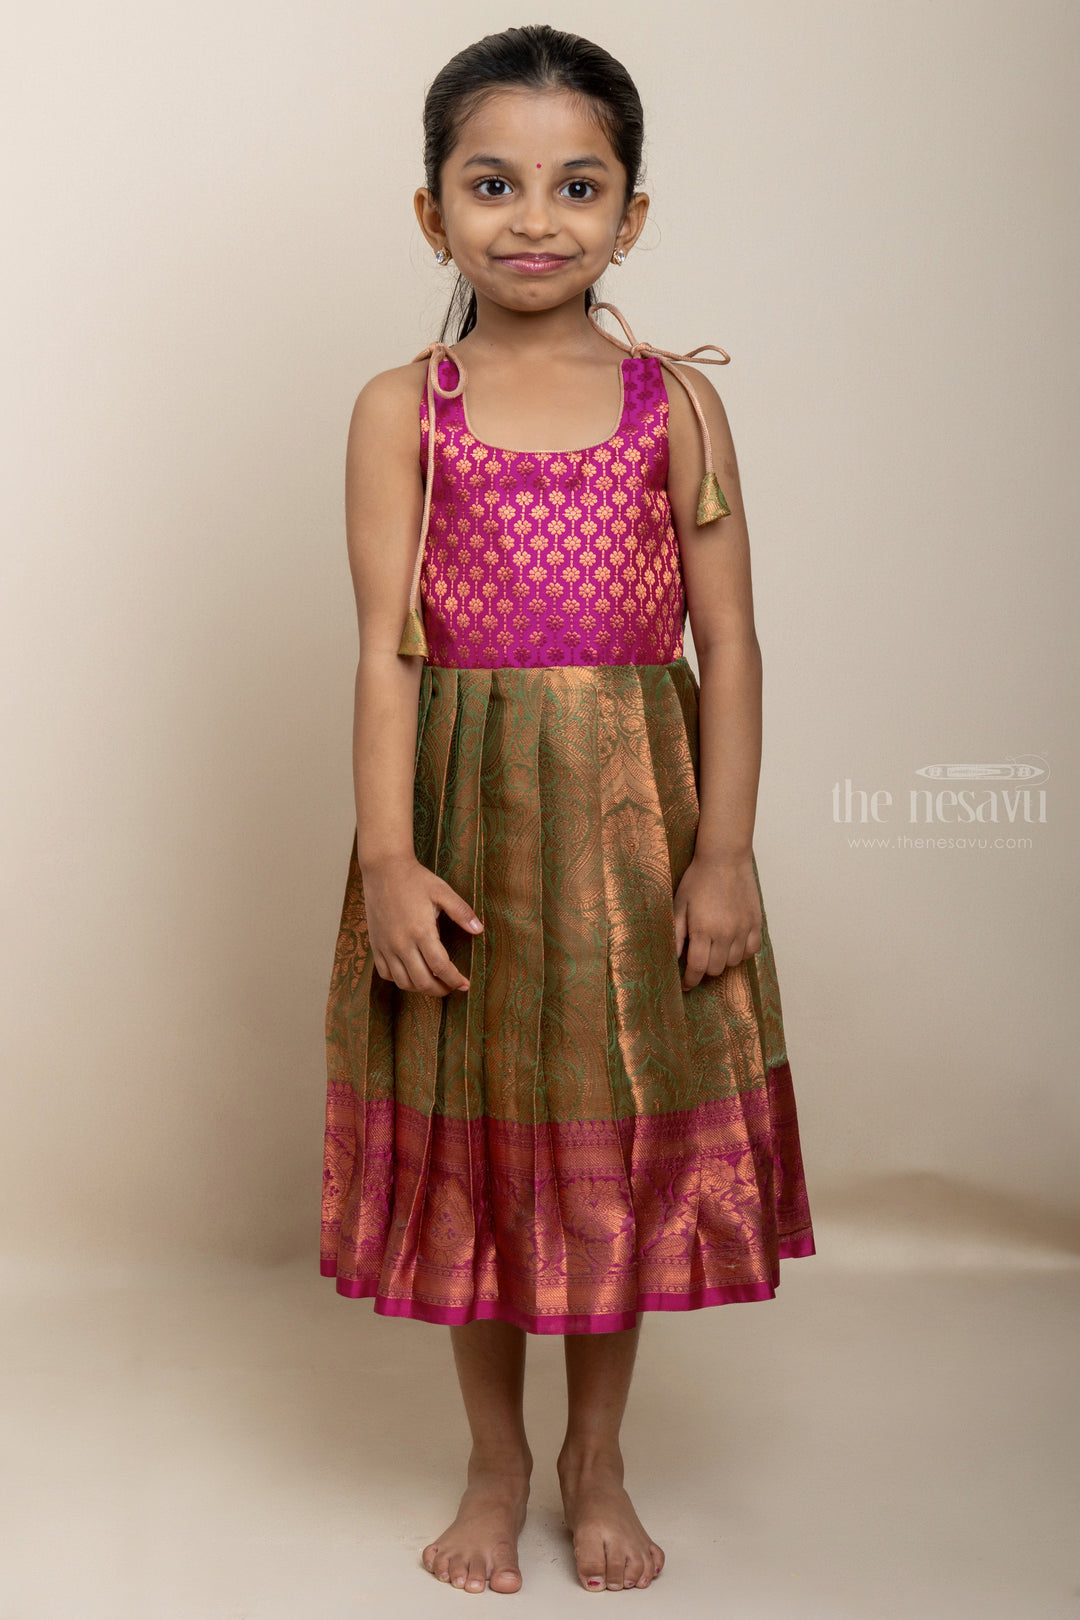 The Nesavu Tie-up Frock Plush Pink And Gold Brocade Printed Tie-Up Frocks For Little Girls Nesavu 12 (3M) / Pink T266A-12 Captivating Pattu Frocks Online| Pillala Frocks| The Nesavu